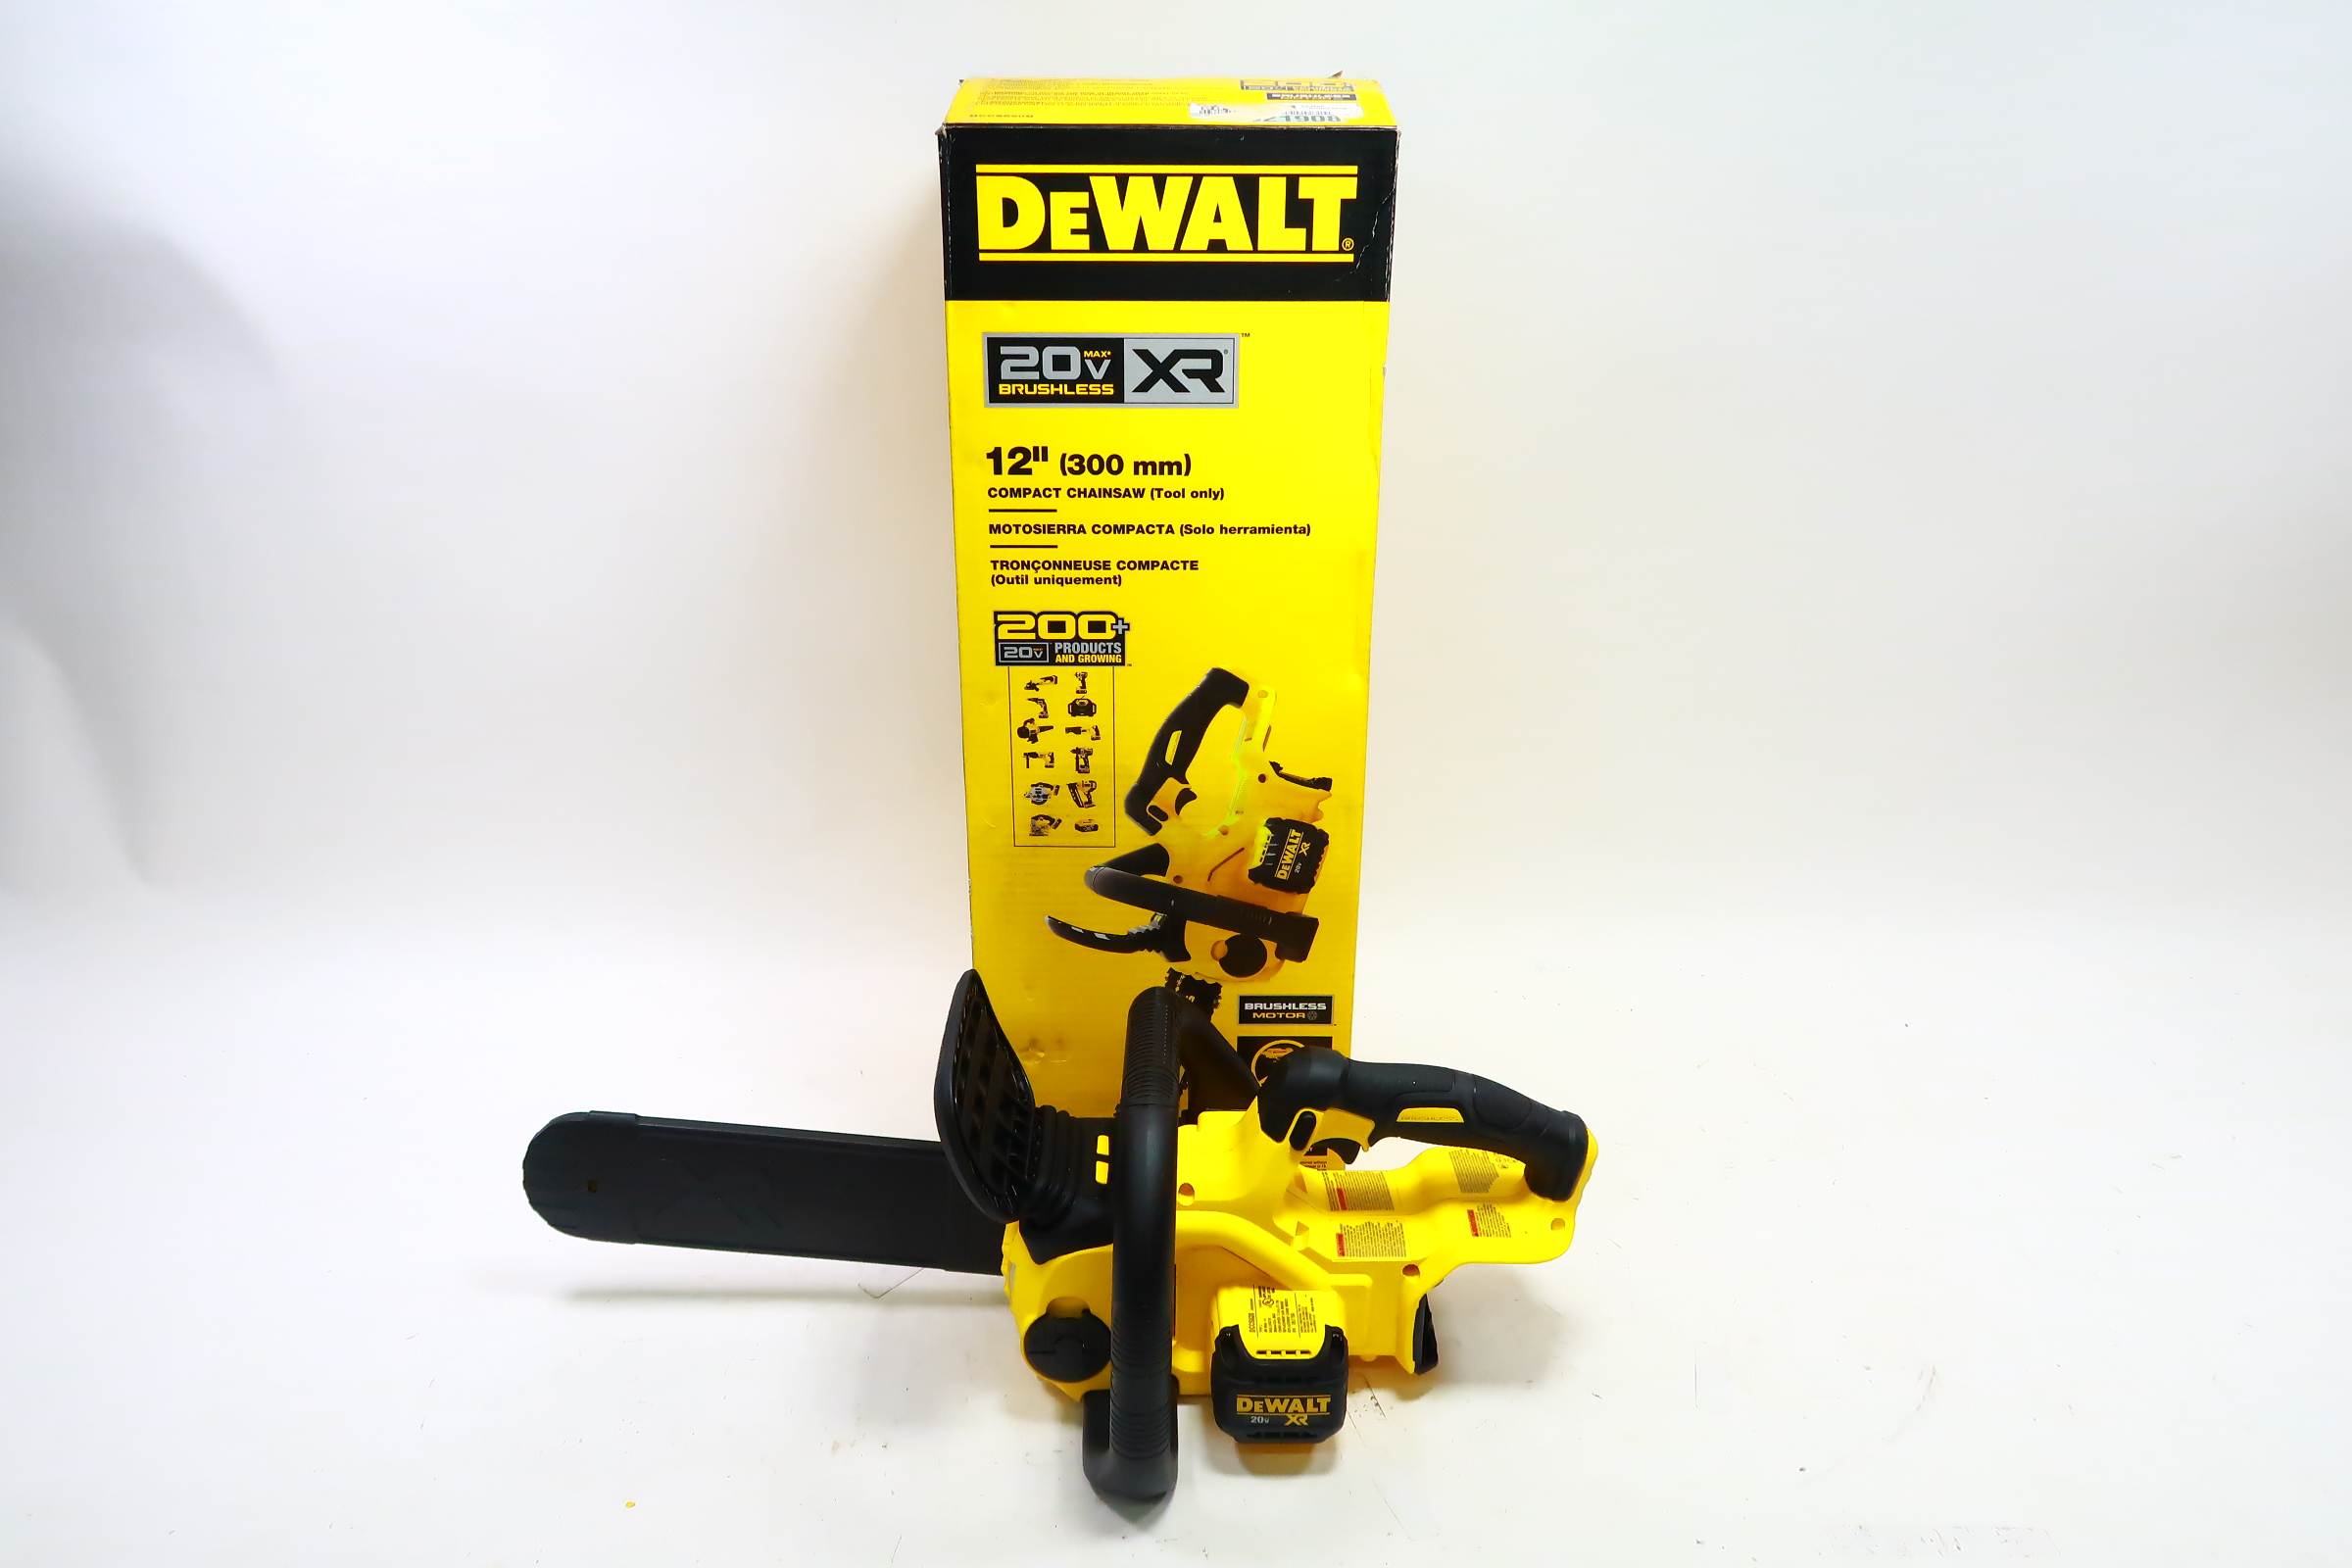 DeWalt DCCS620 20V MAX 12 Brushless Lithium-Ion Cordless Chainsaw